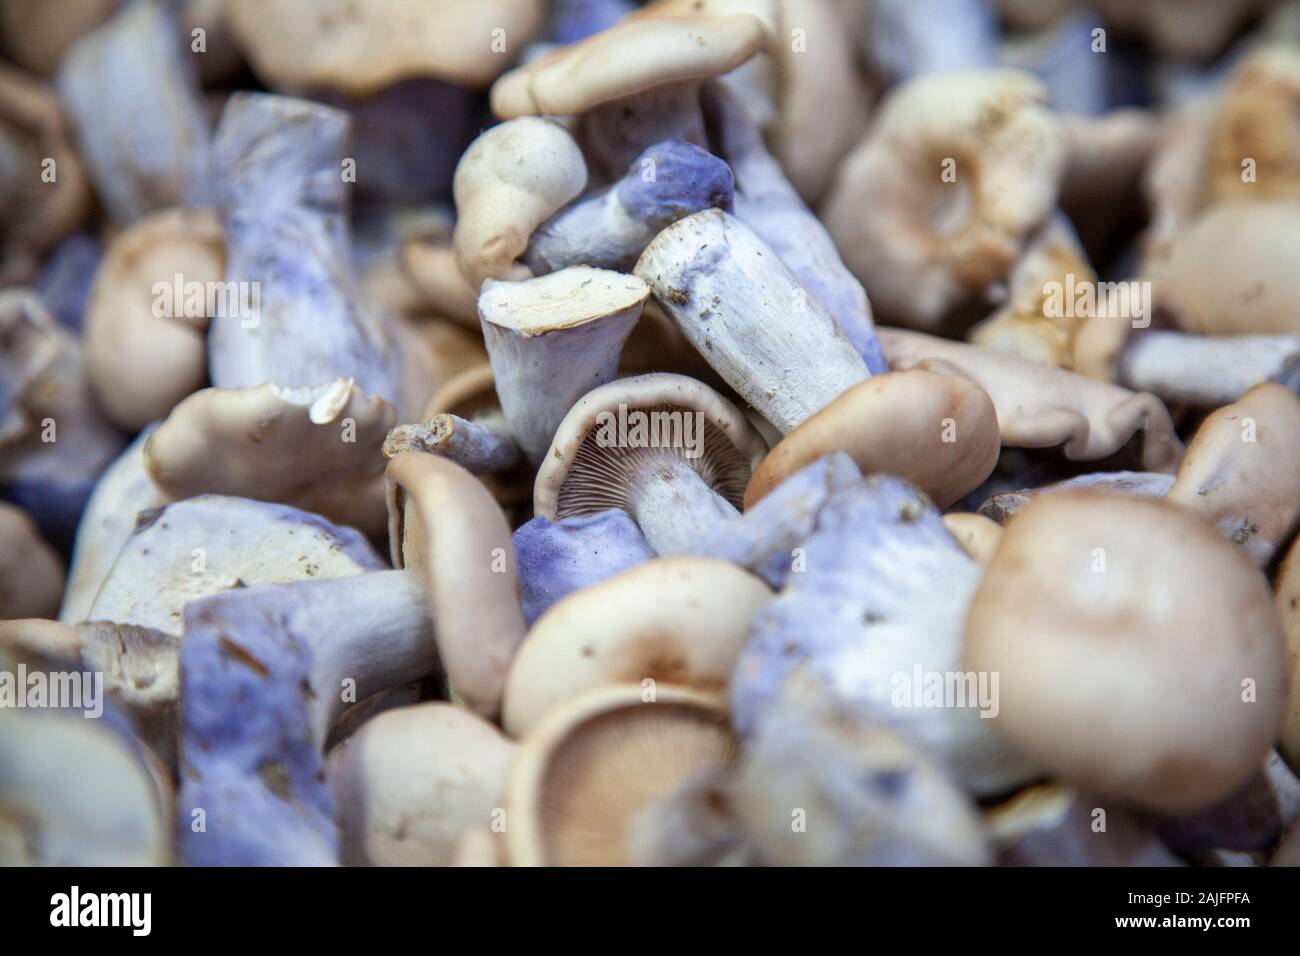 Pied Bleu Mushrooms at Borough Market in London , UK Stock Photo